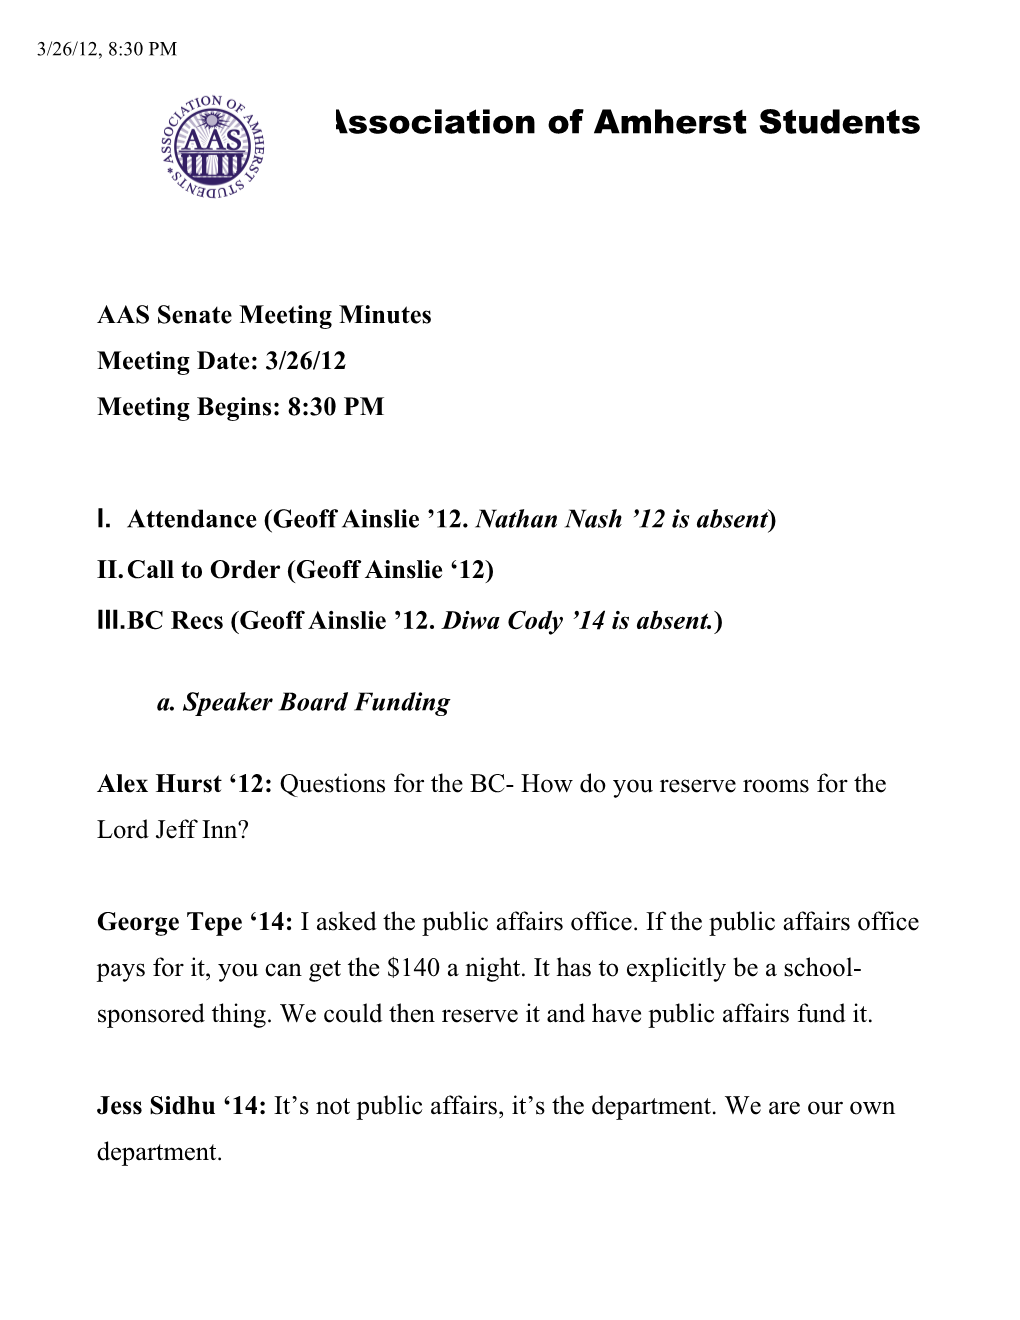 AAS Senate Meeting Minutes